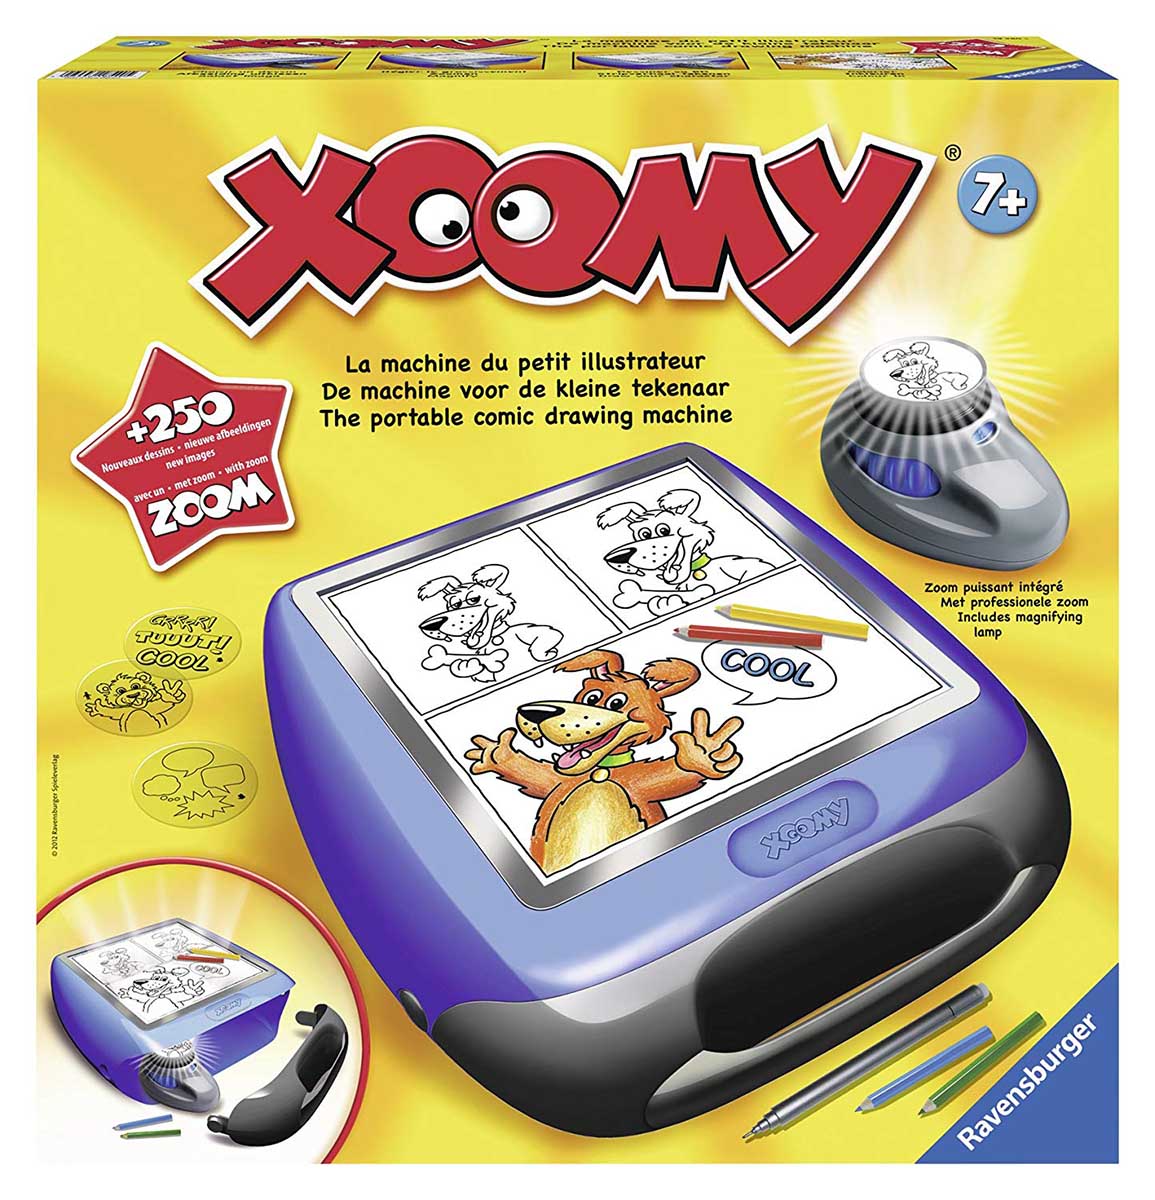 Xoomy maxi 7+ tekenprojector